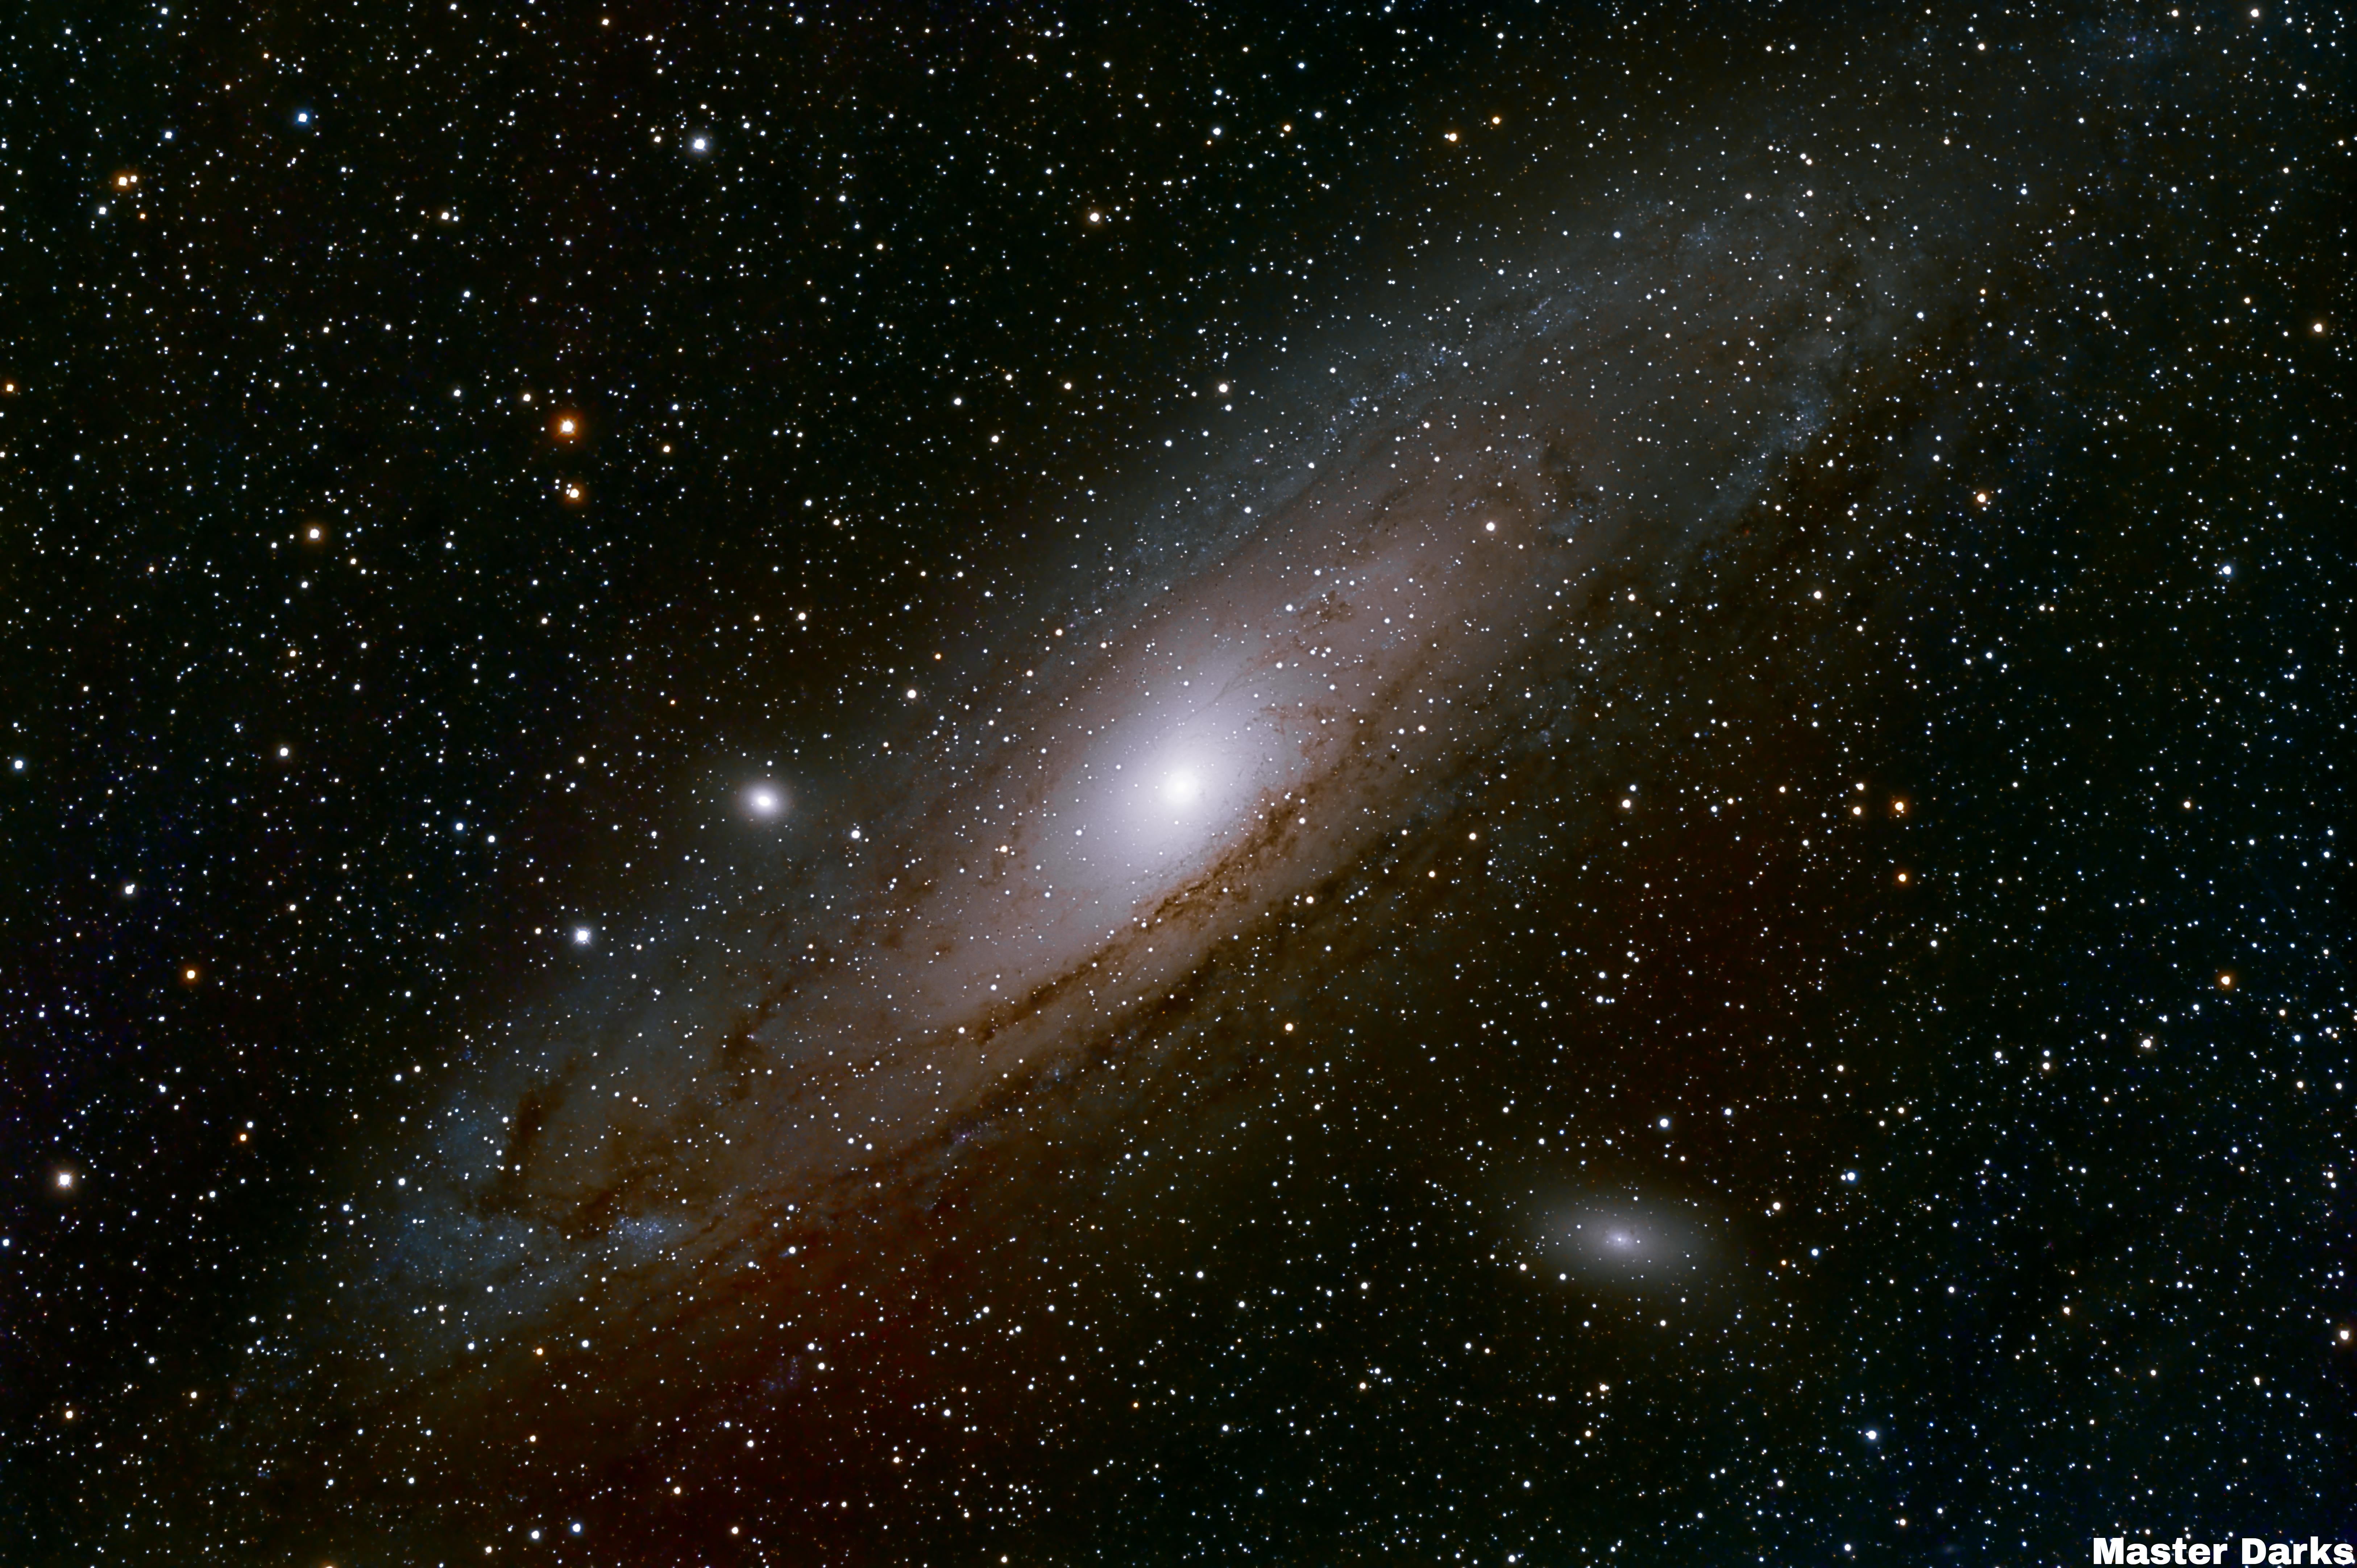 M 31 – Andromeda Galaxy | Master Darks